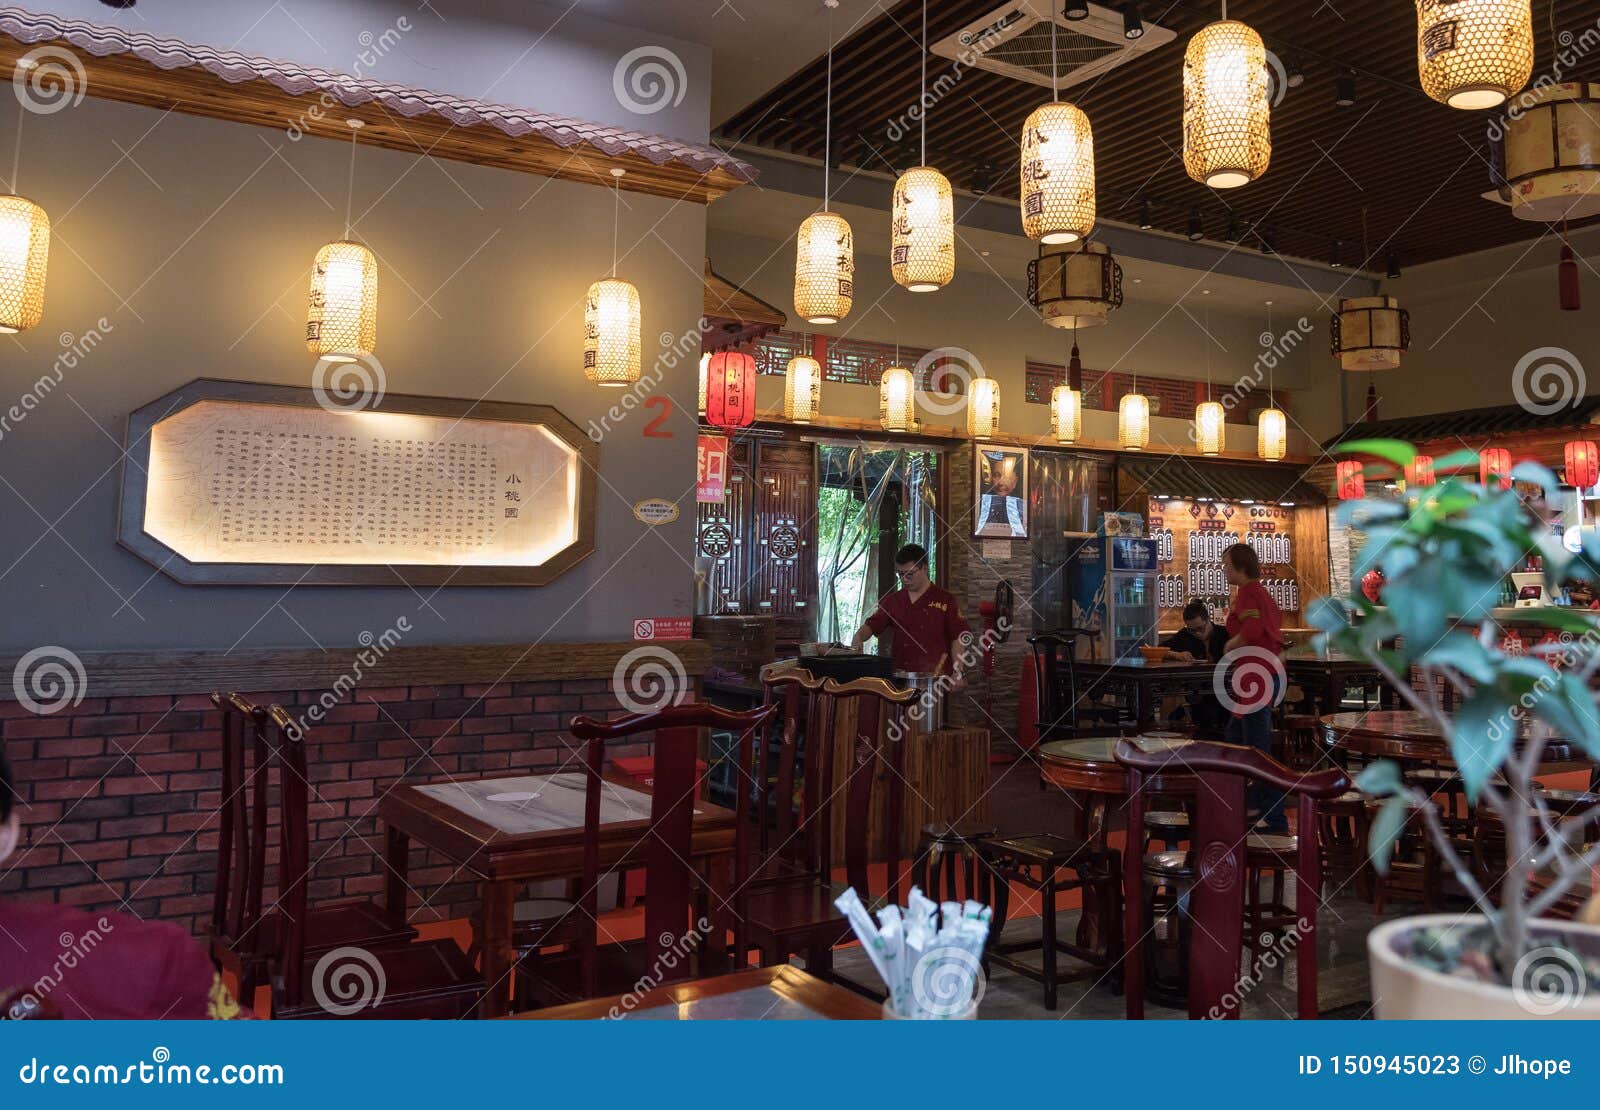 Asian Restaurant Interior Design Ideas - kcwatcher